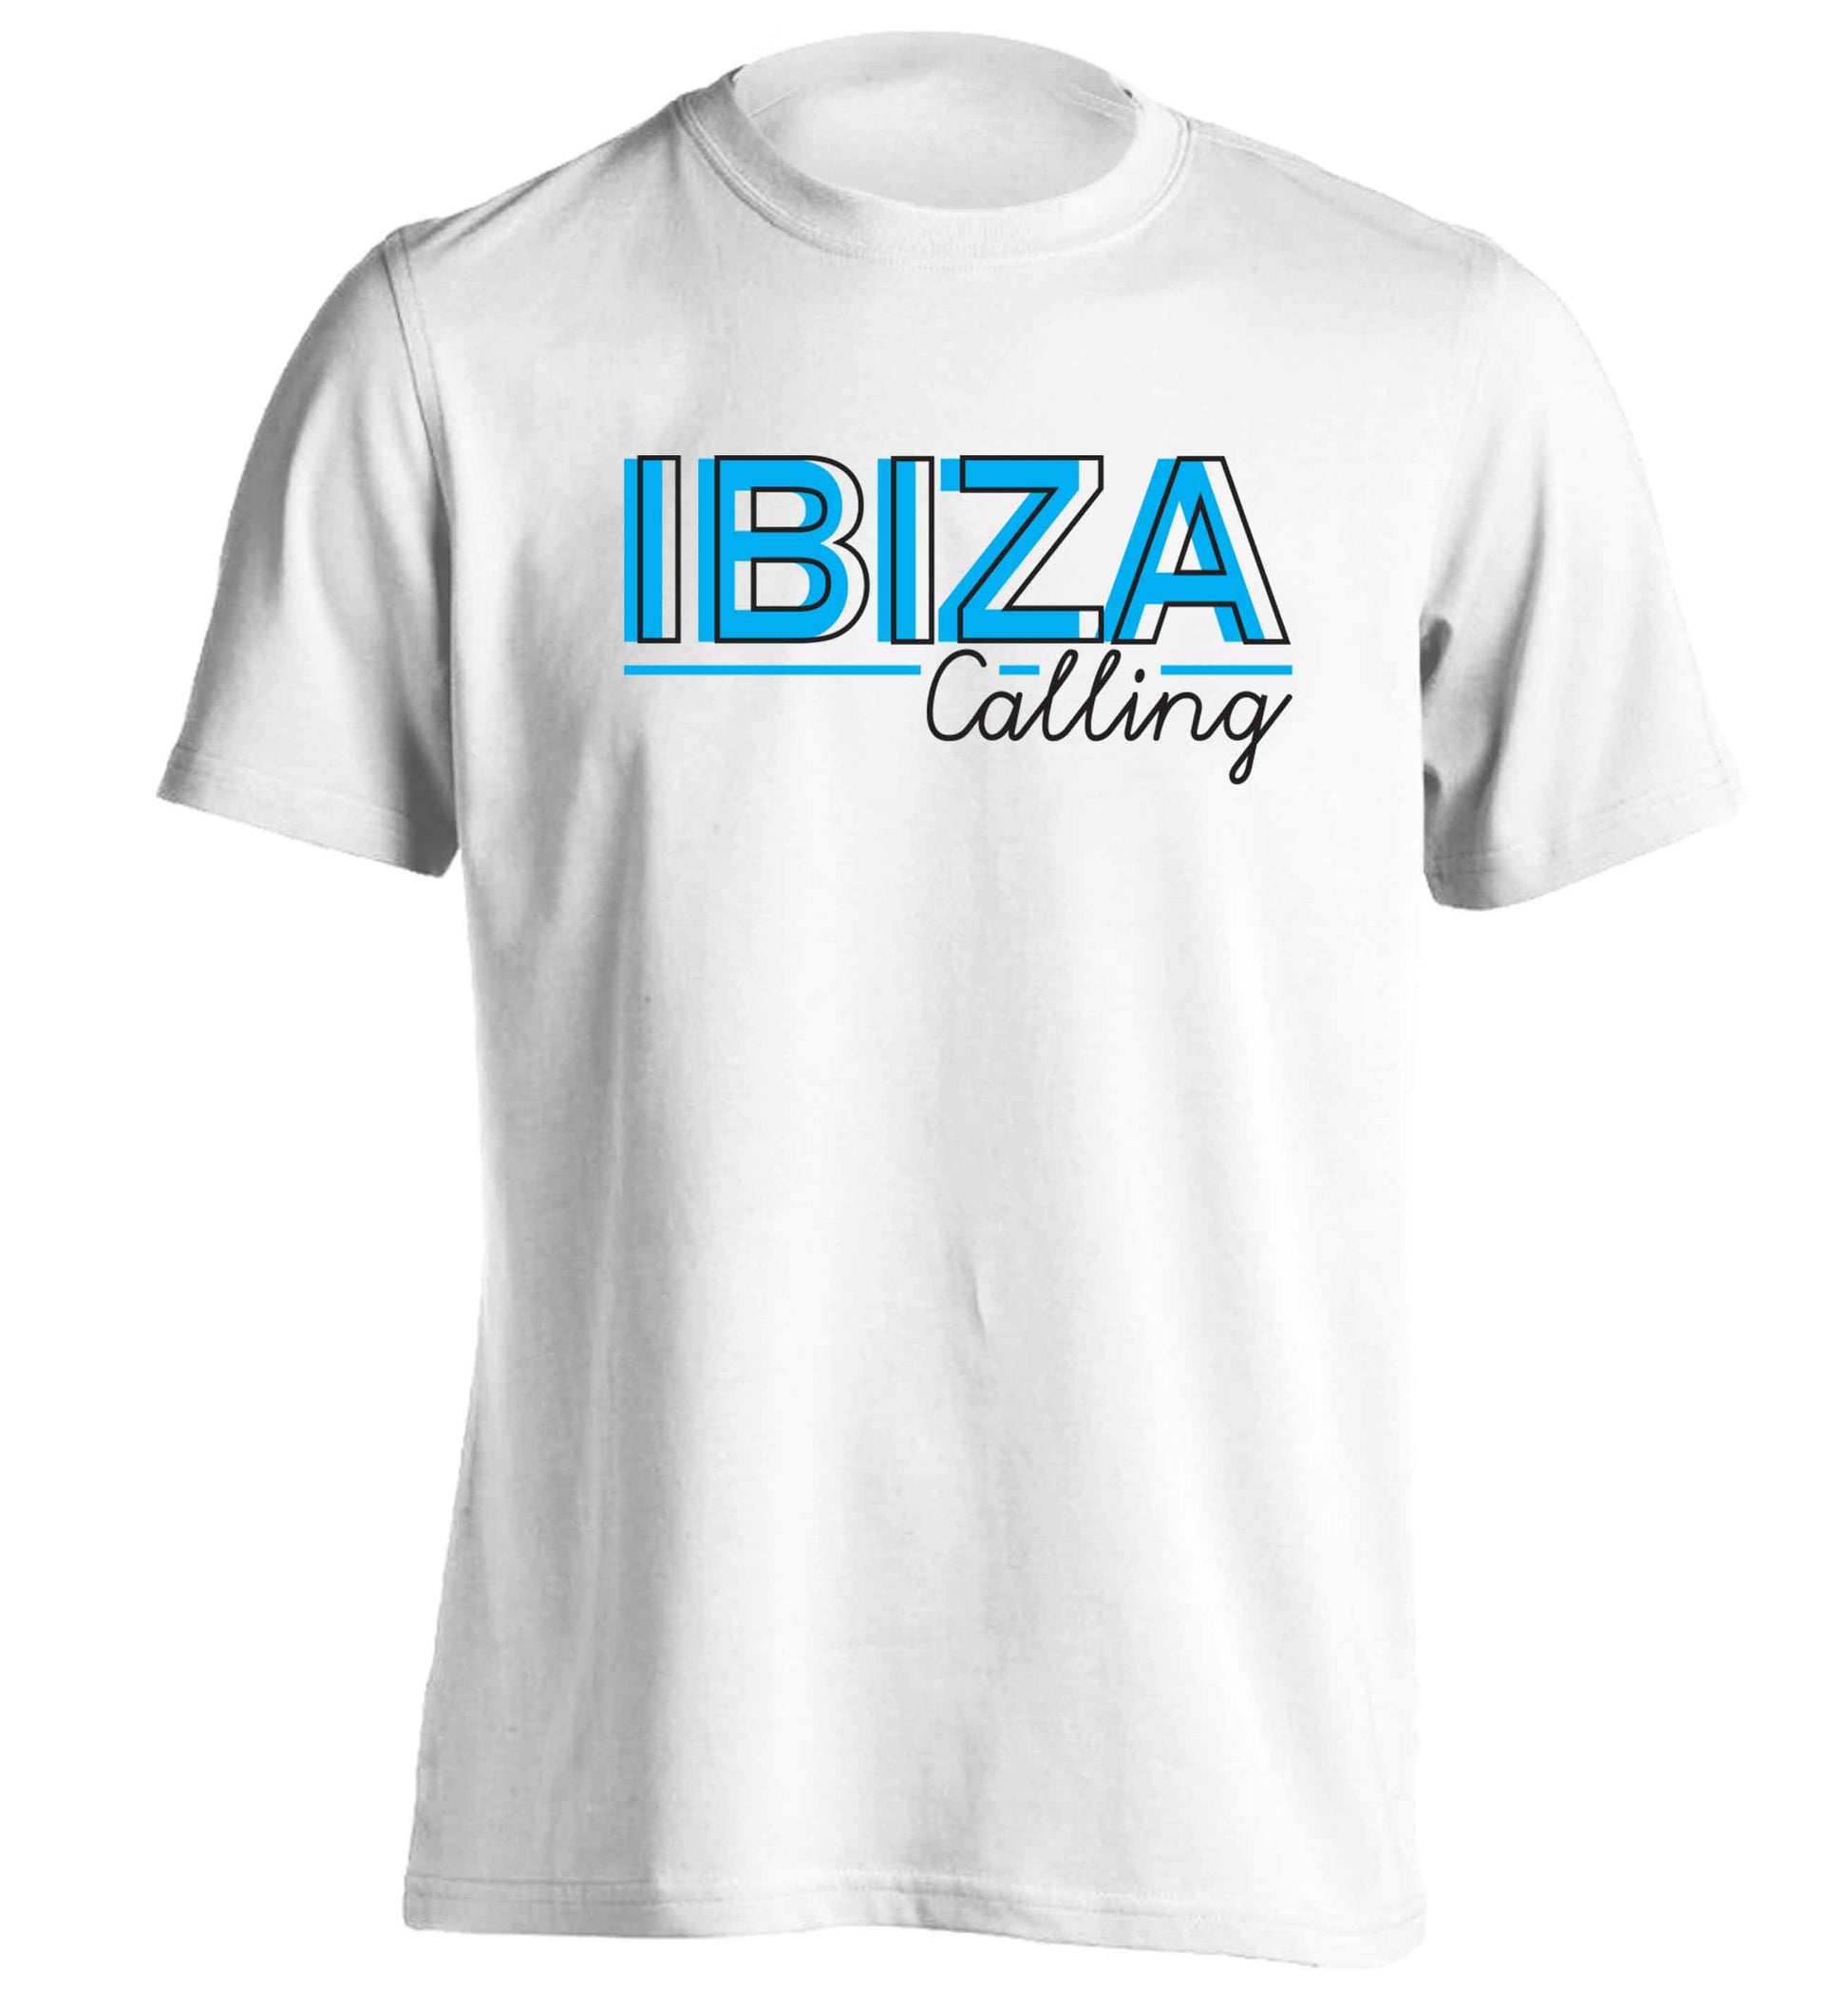 Ibiza calling adults unisex white Tshirt 2XL